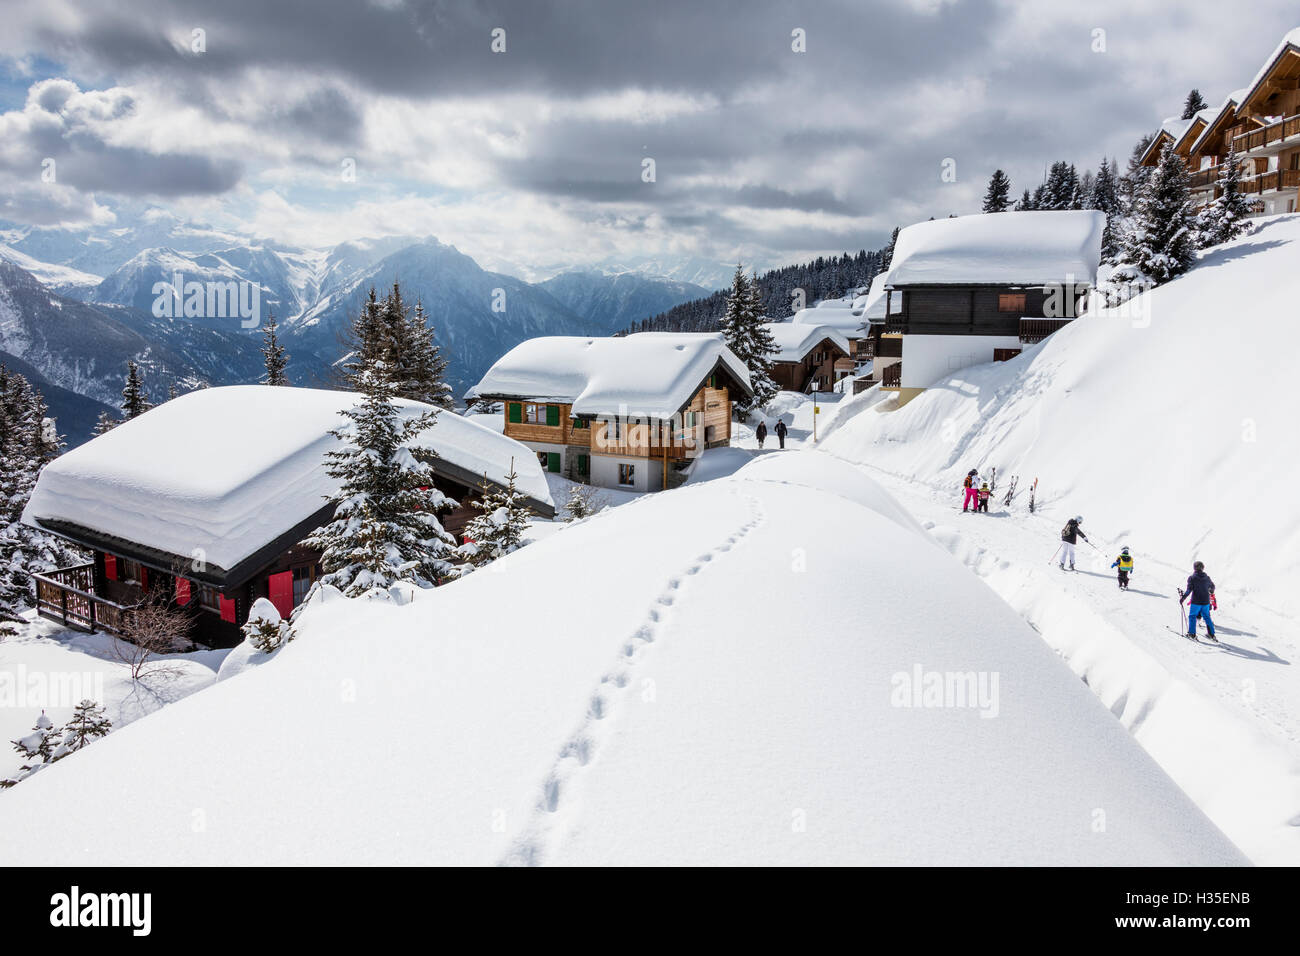 Tourists and skiers enjoying the snowy landscape, Bettmeralp, district of Raron, canton of Valais, Switzerland Stock Photo